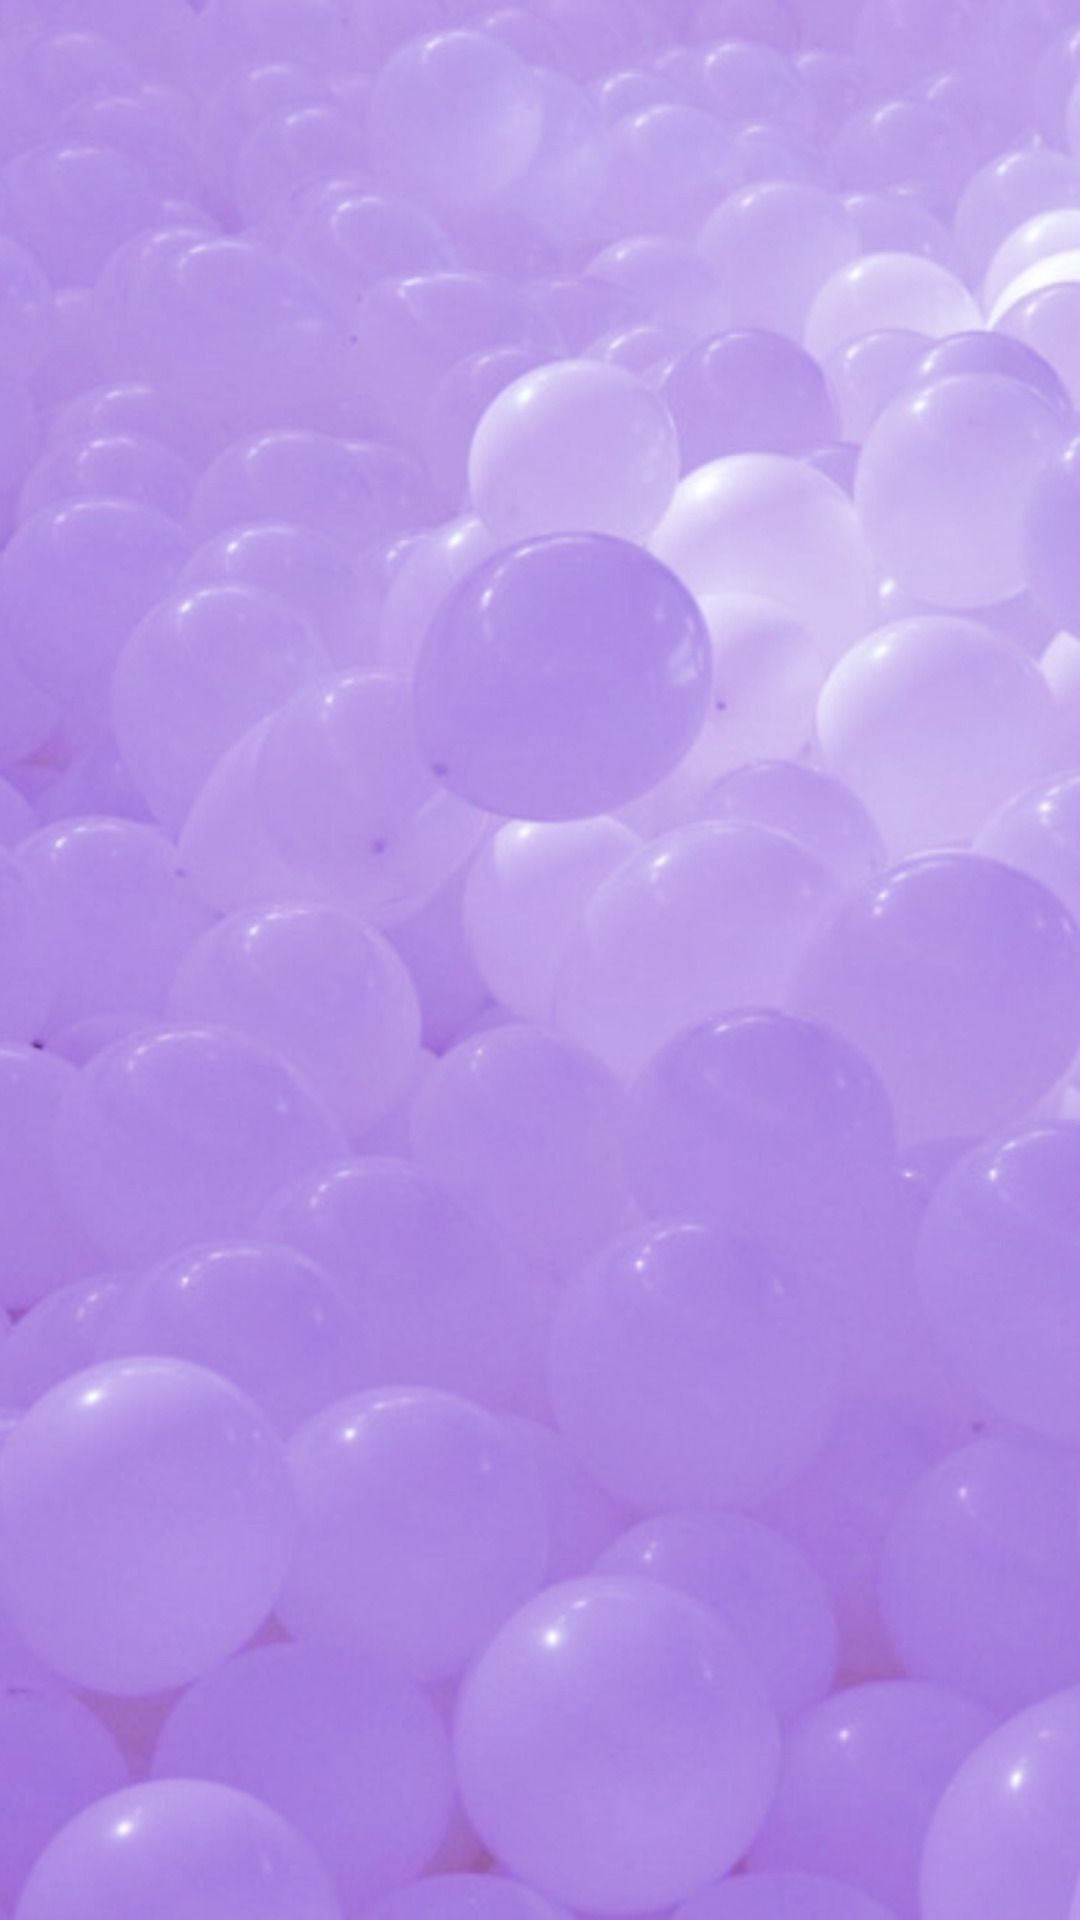 lavenderxolilac: “Happy birthday to me ”. Lavender aesthetic